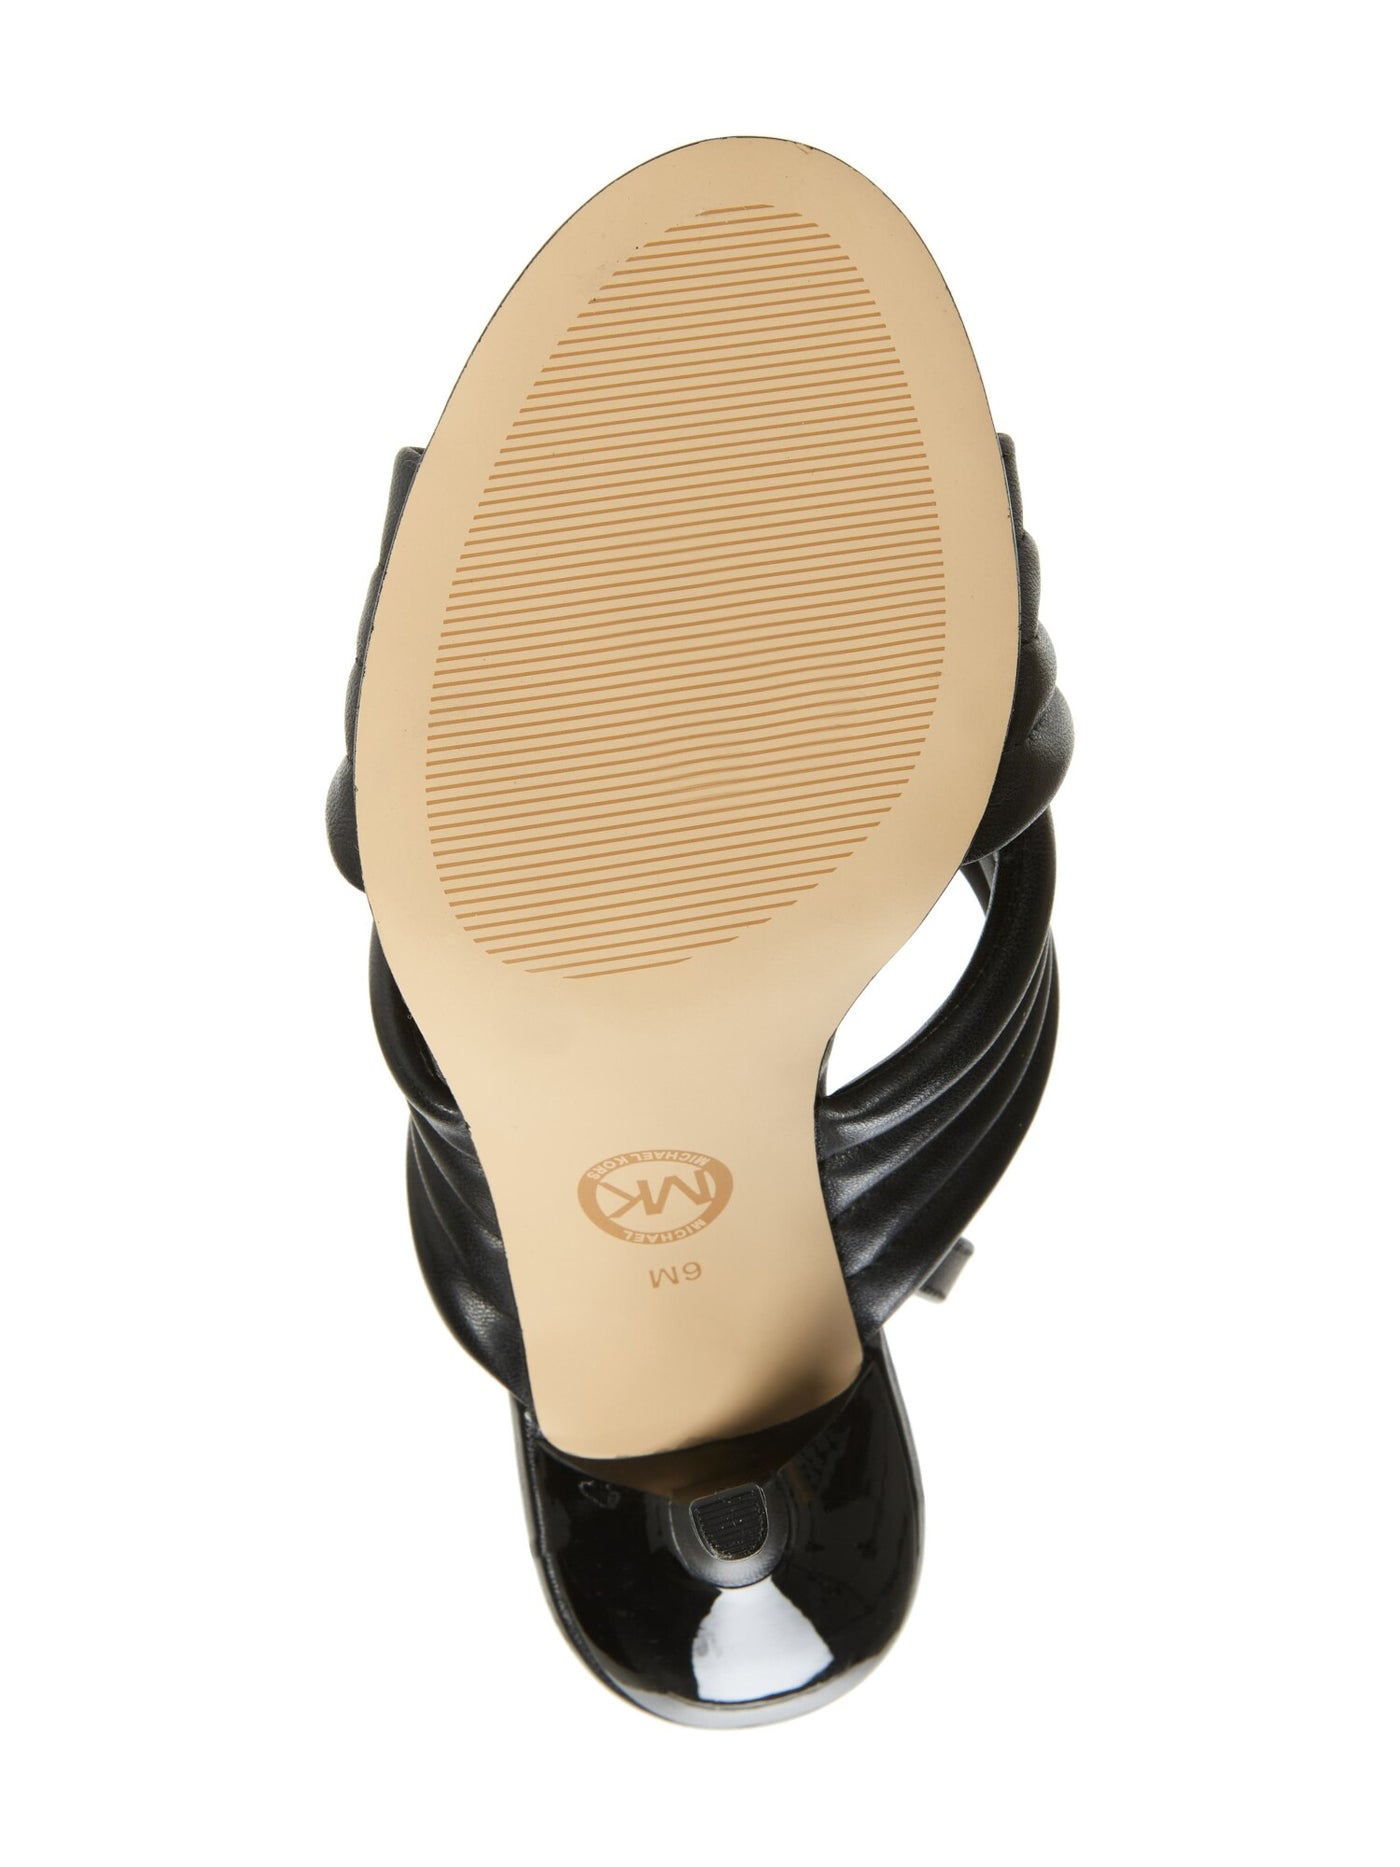 MICHAEL KORS Womens Black Puffy Crisscross Ankle Strap Adjustable Rocye Round Toe Stiletto Buckle Leather Dress Sandals Shoes M